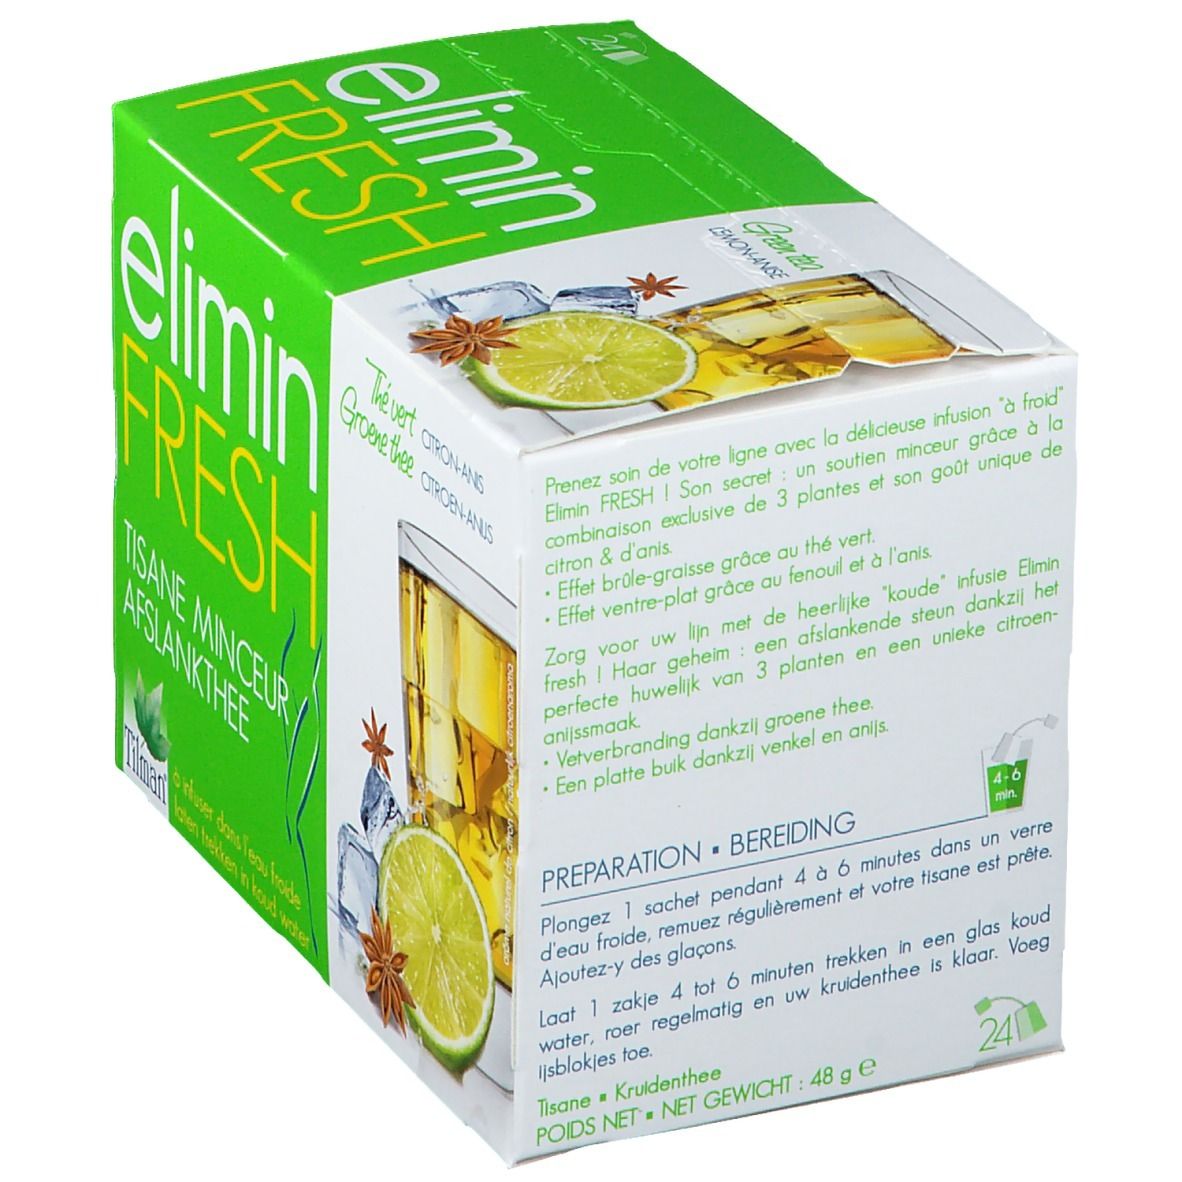 Tilman® elimin Fresh Grüner Tee